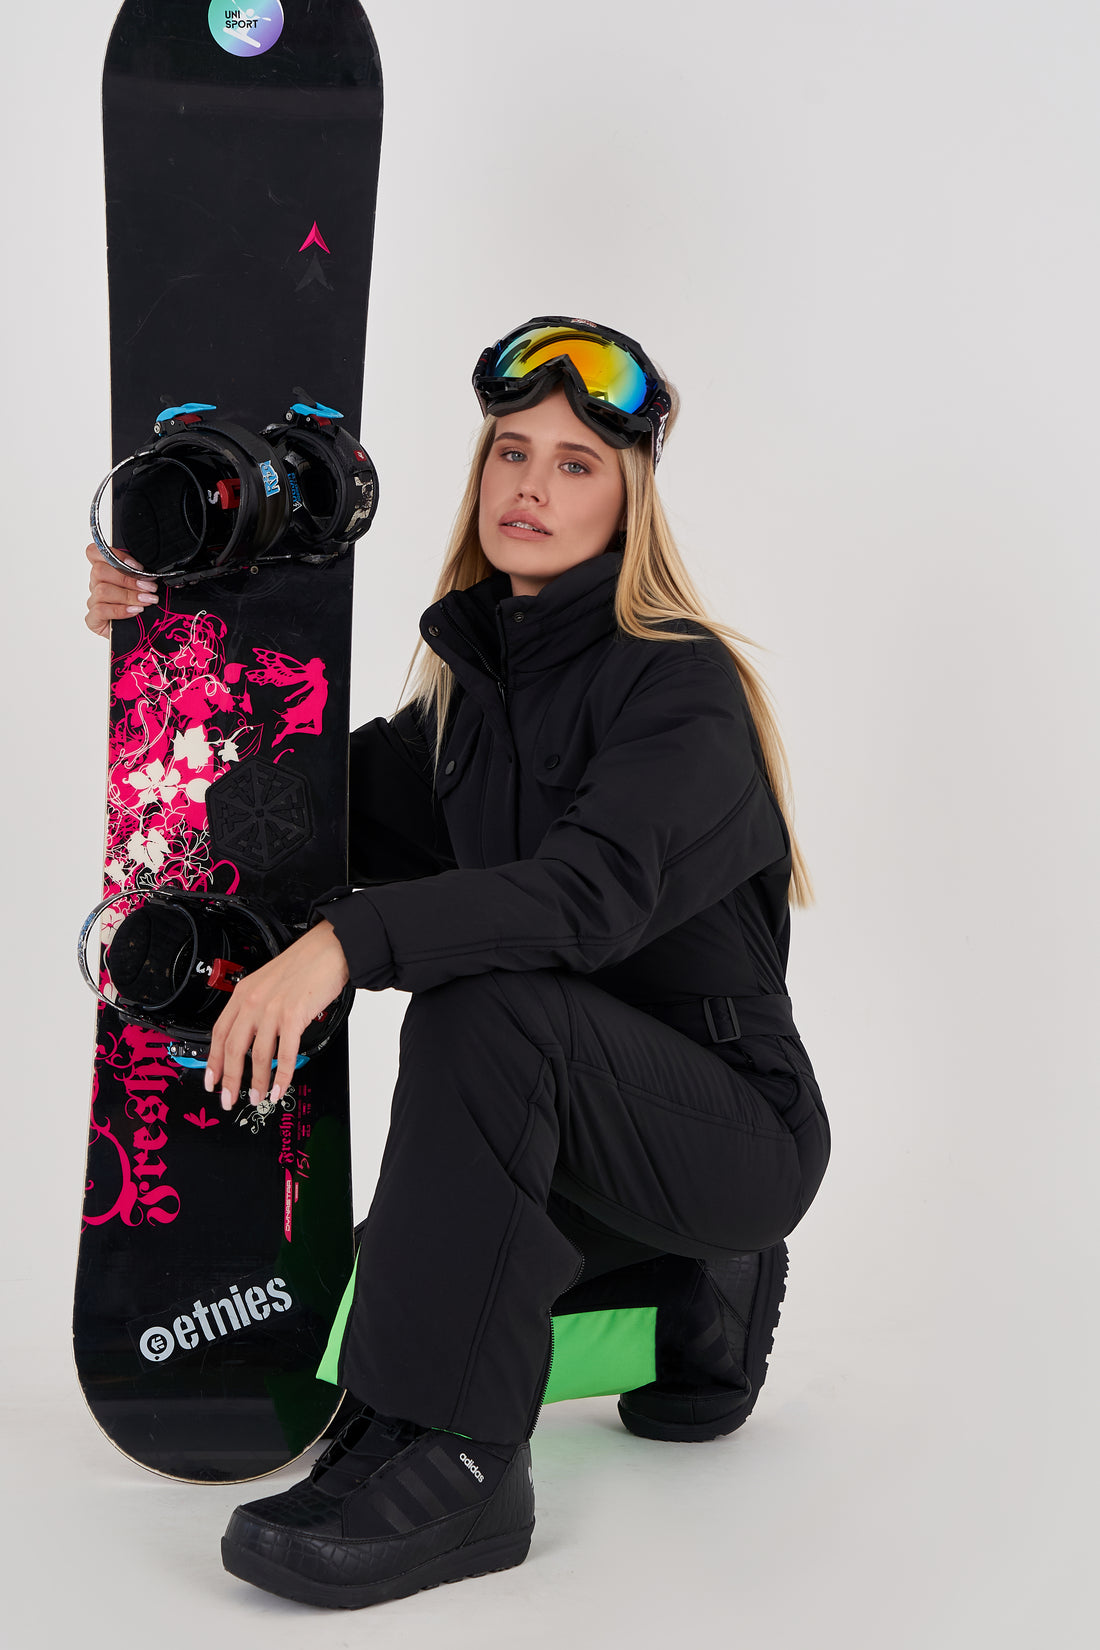 Ski suit RAINIER - BLACK+GREEN - one piece ski women